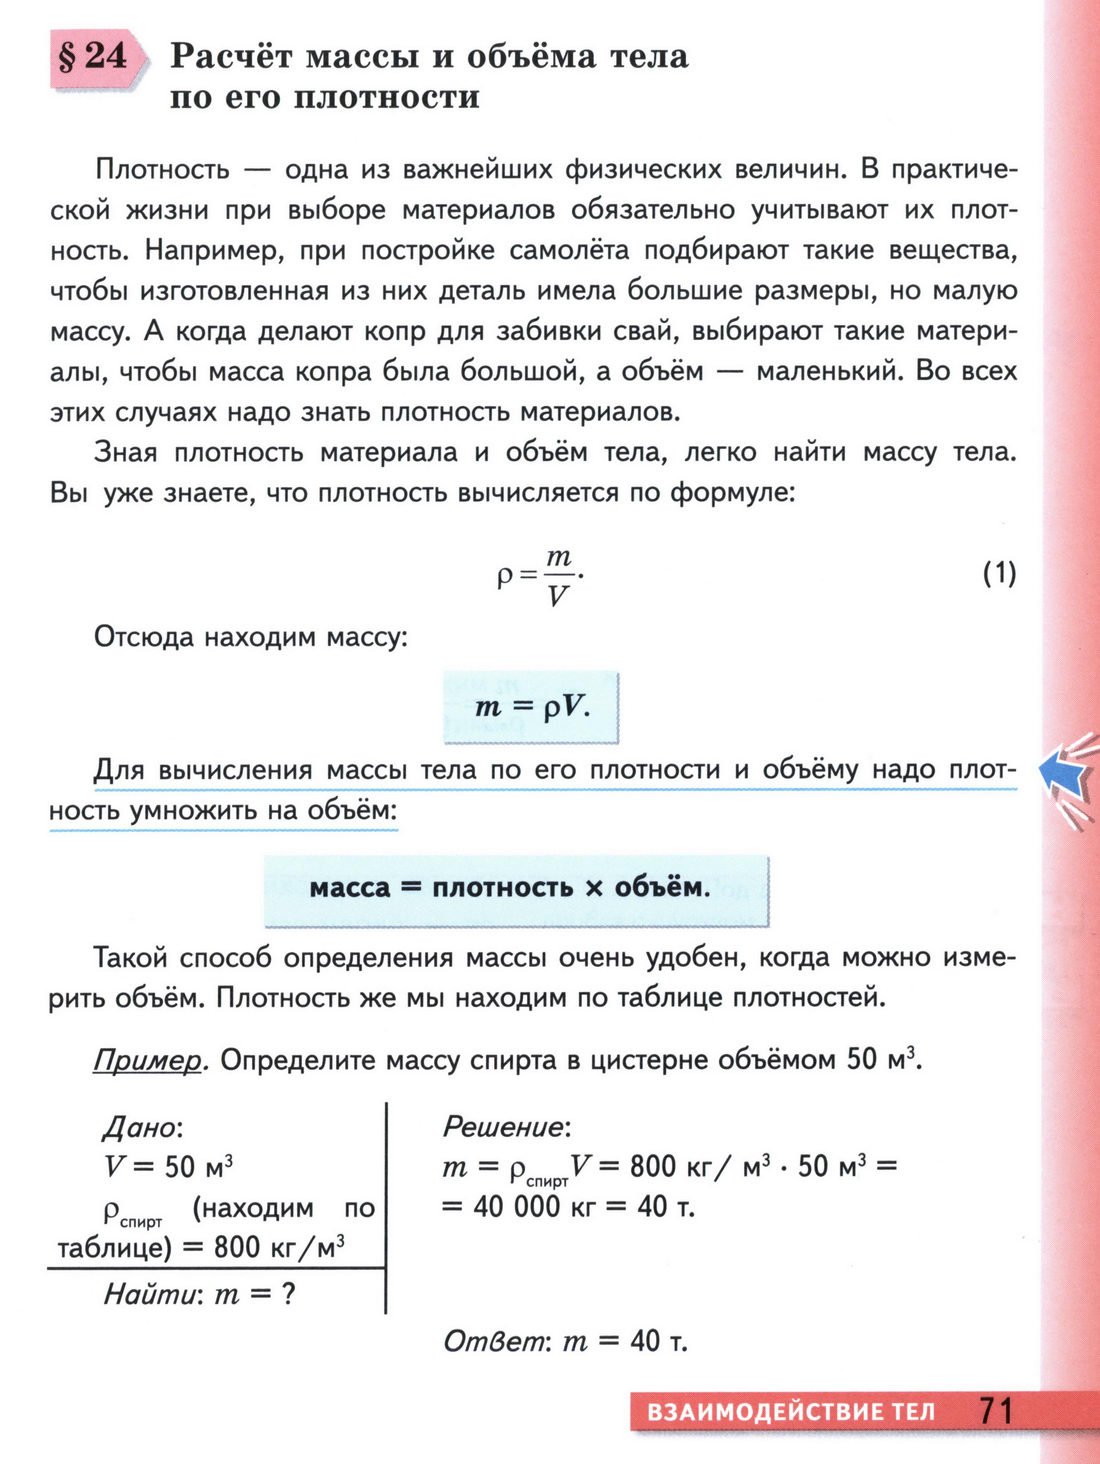 стр 71 учебник физики 7 класс параграф 24